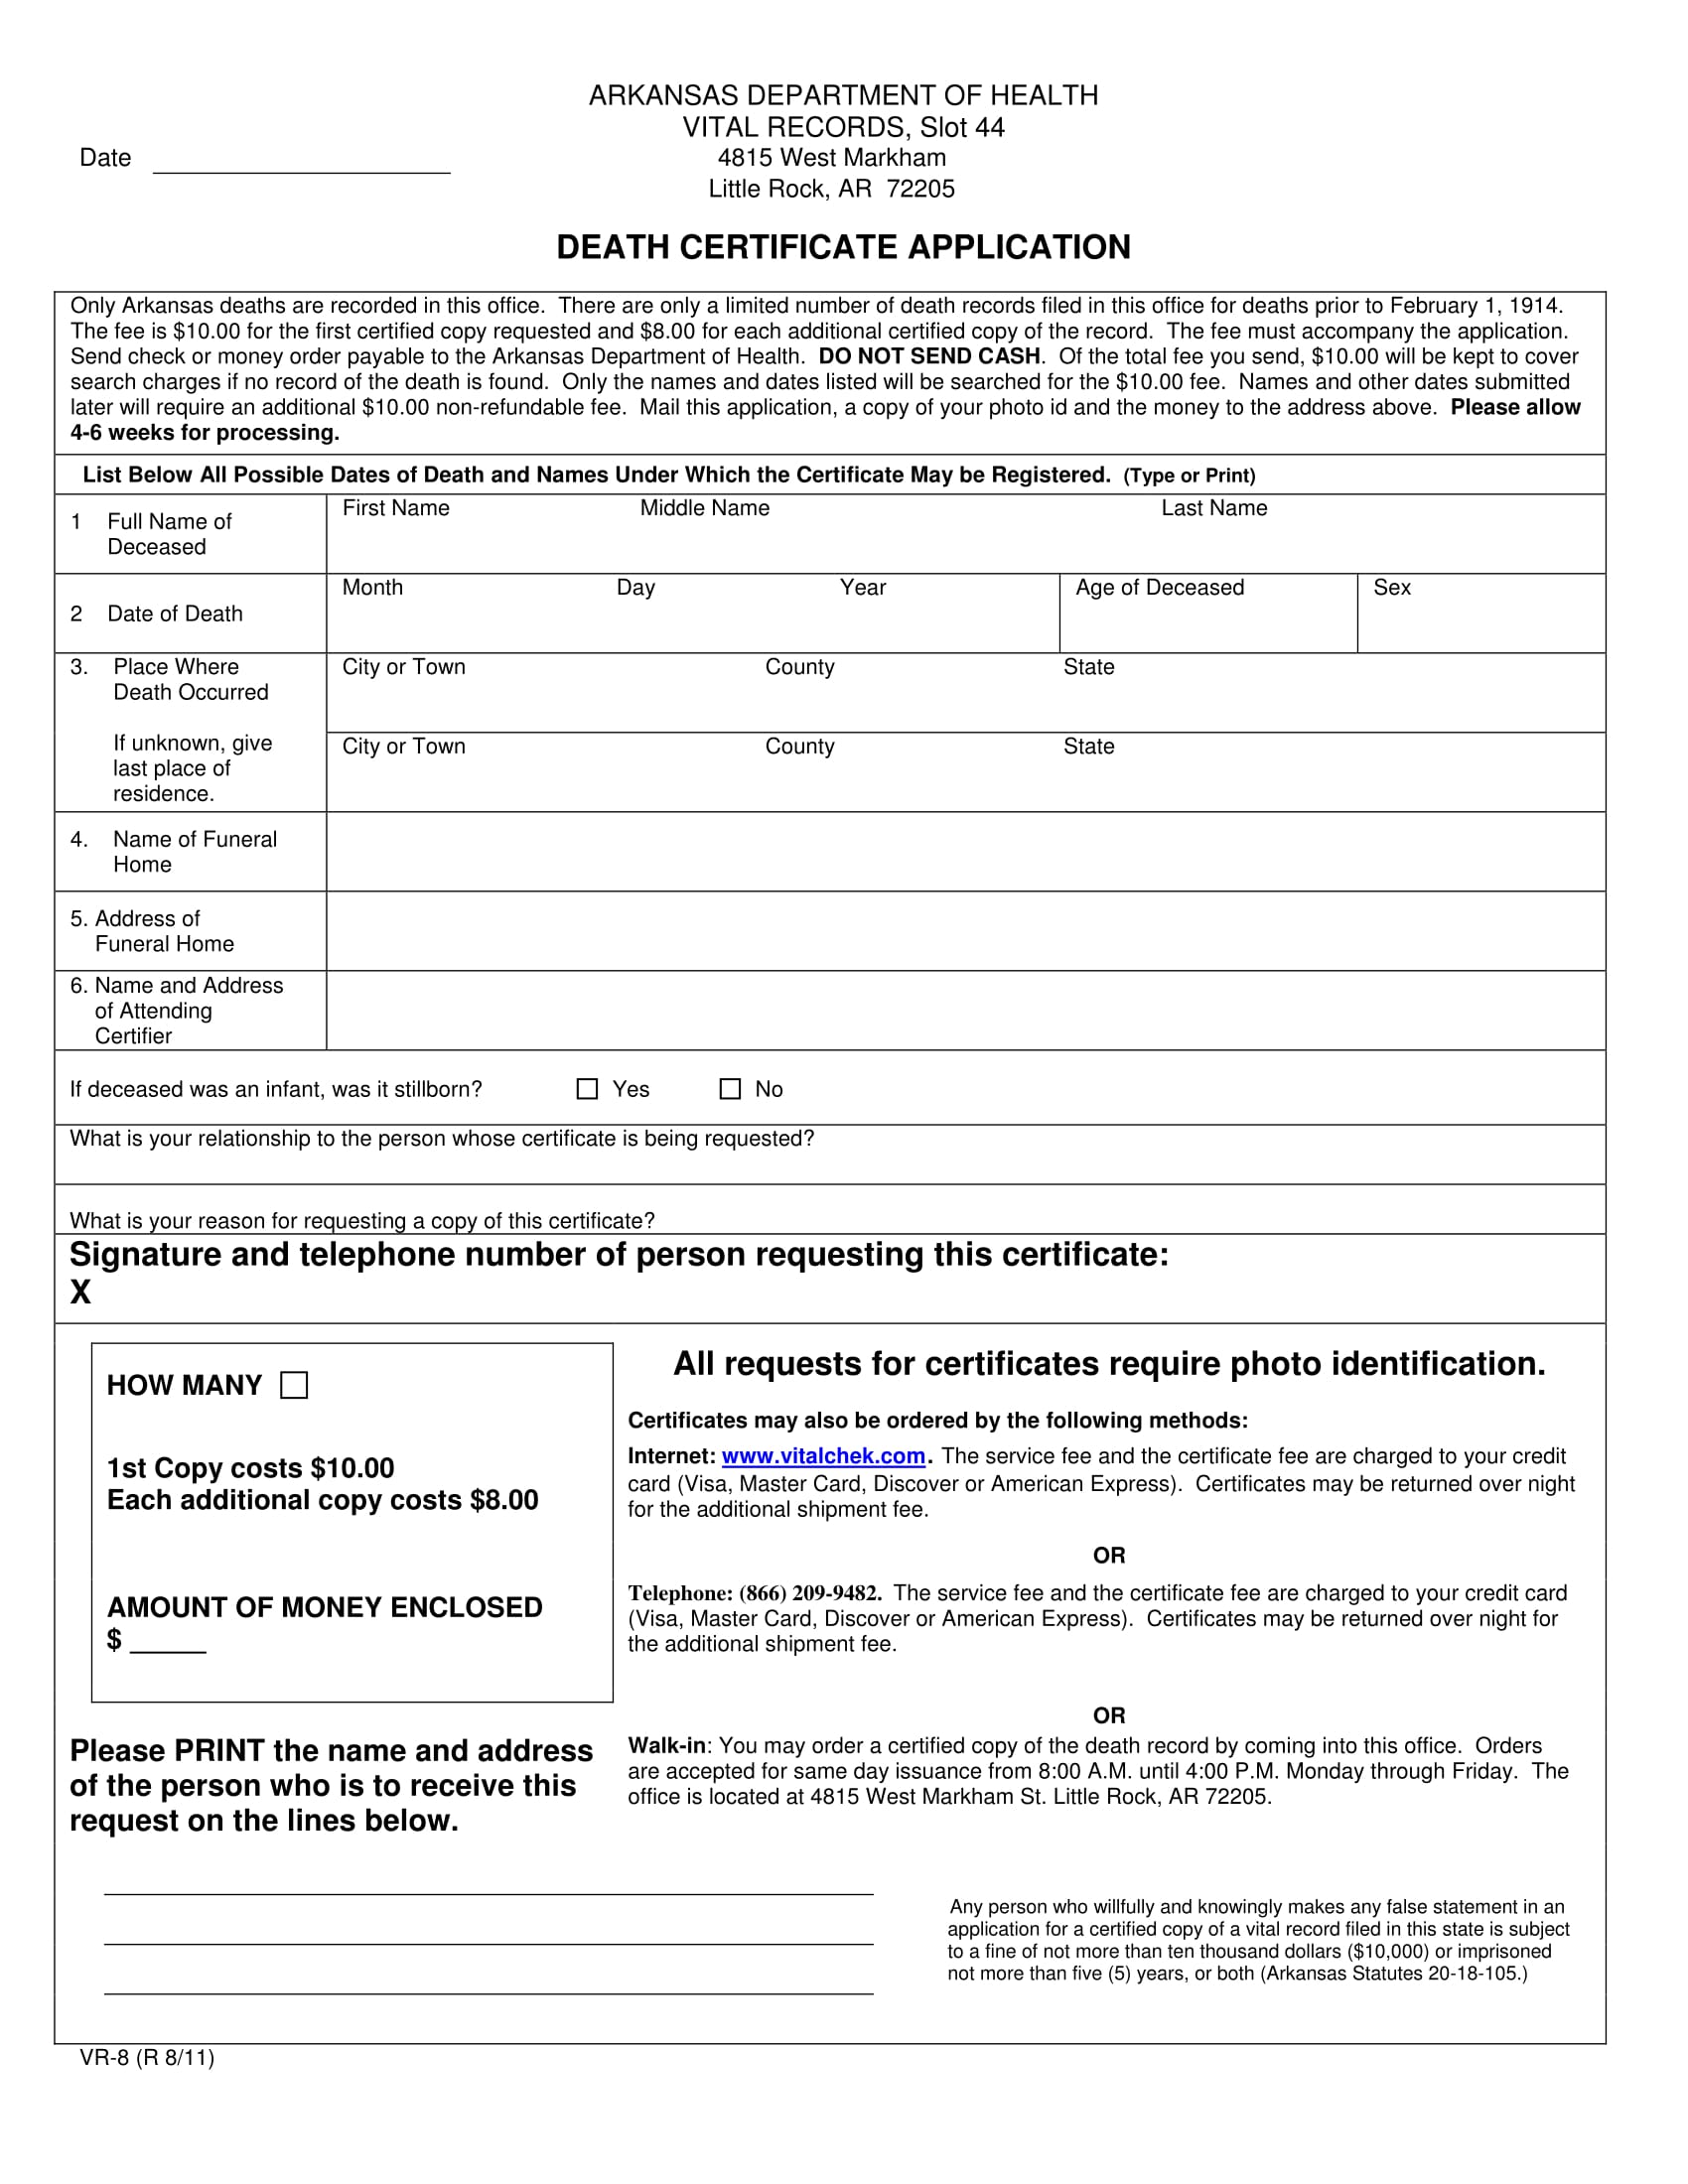 death certificate application form 1